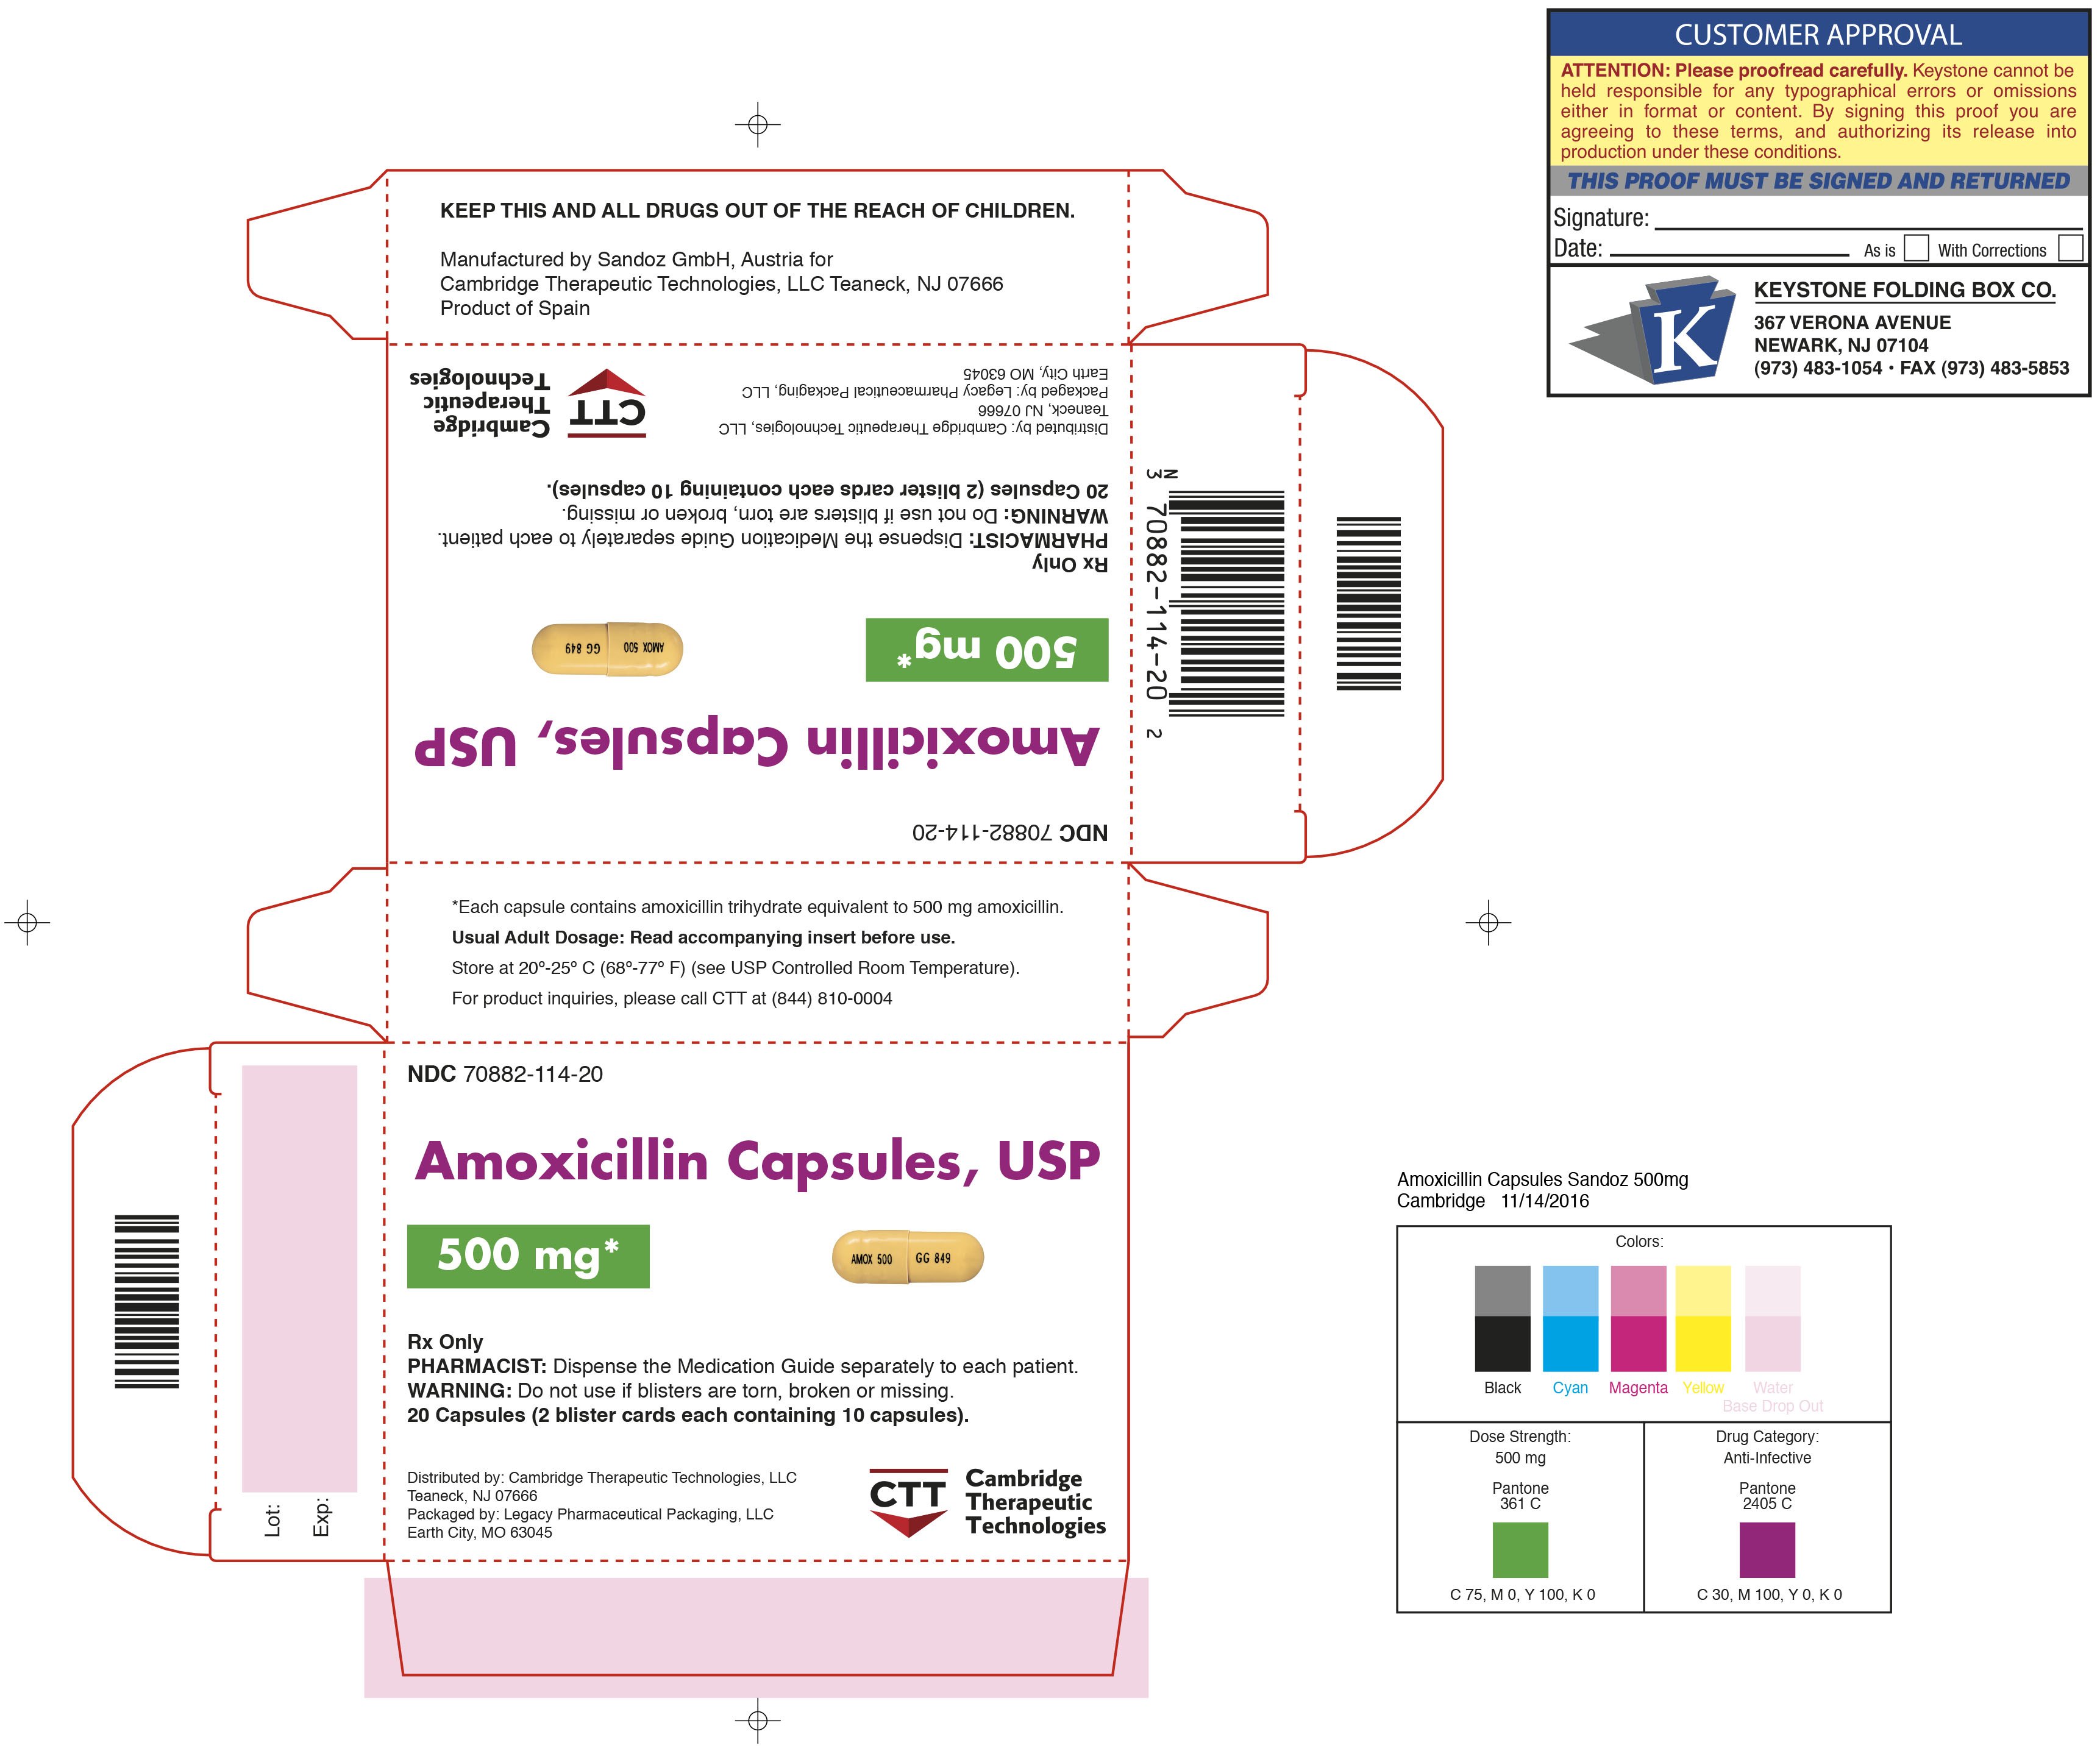 Amoxicillin Capsules, USP 500mg